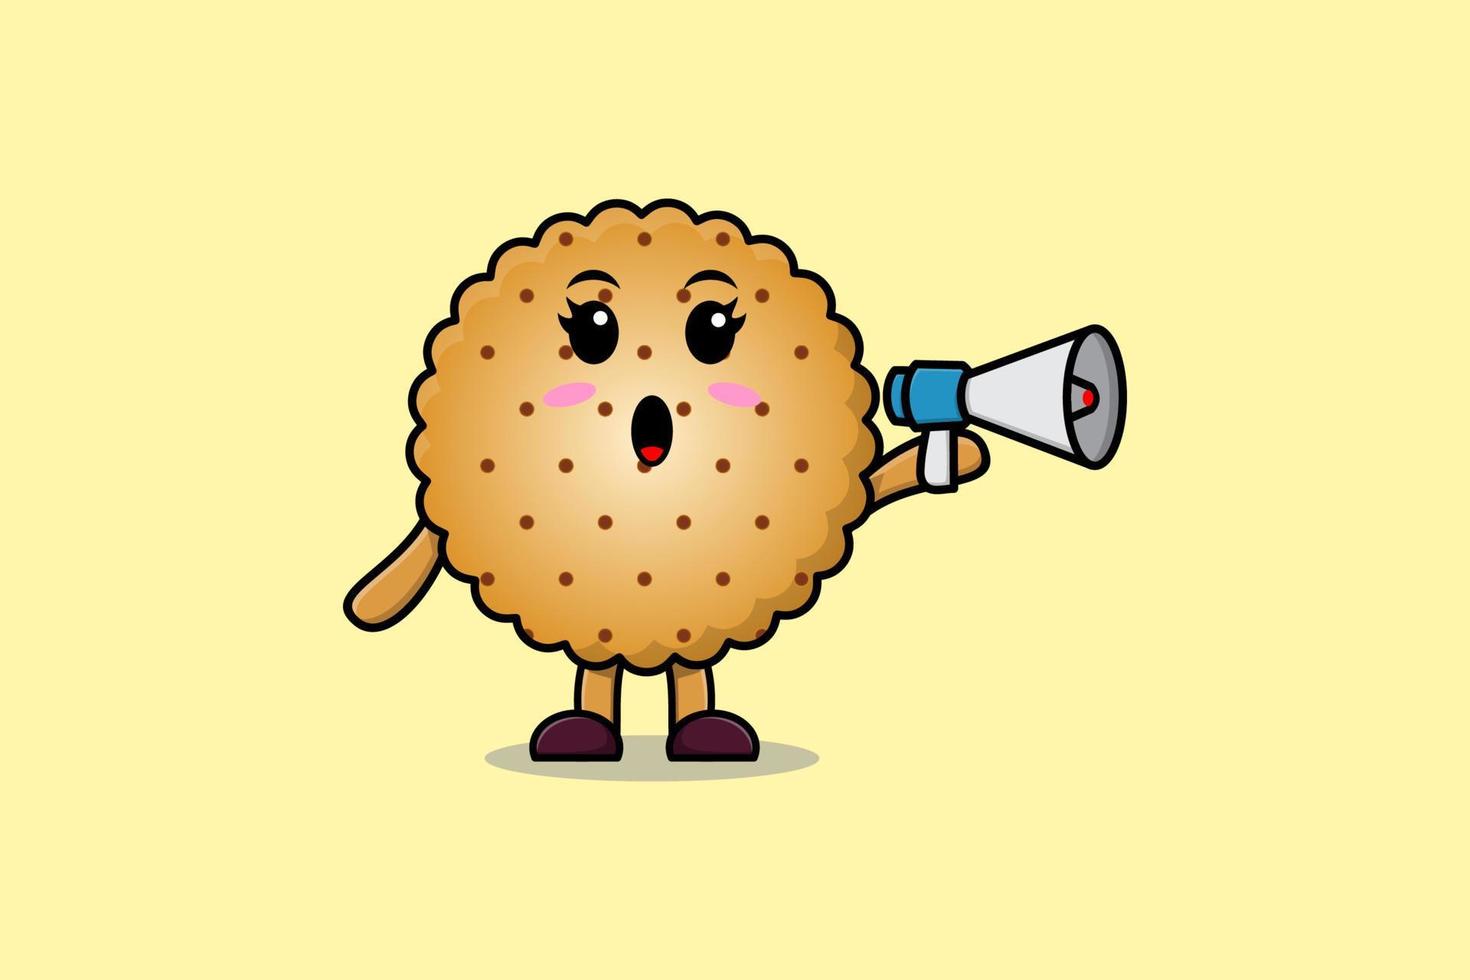 Cute Cartoon Cookie character speak with megaphone vector